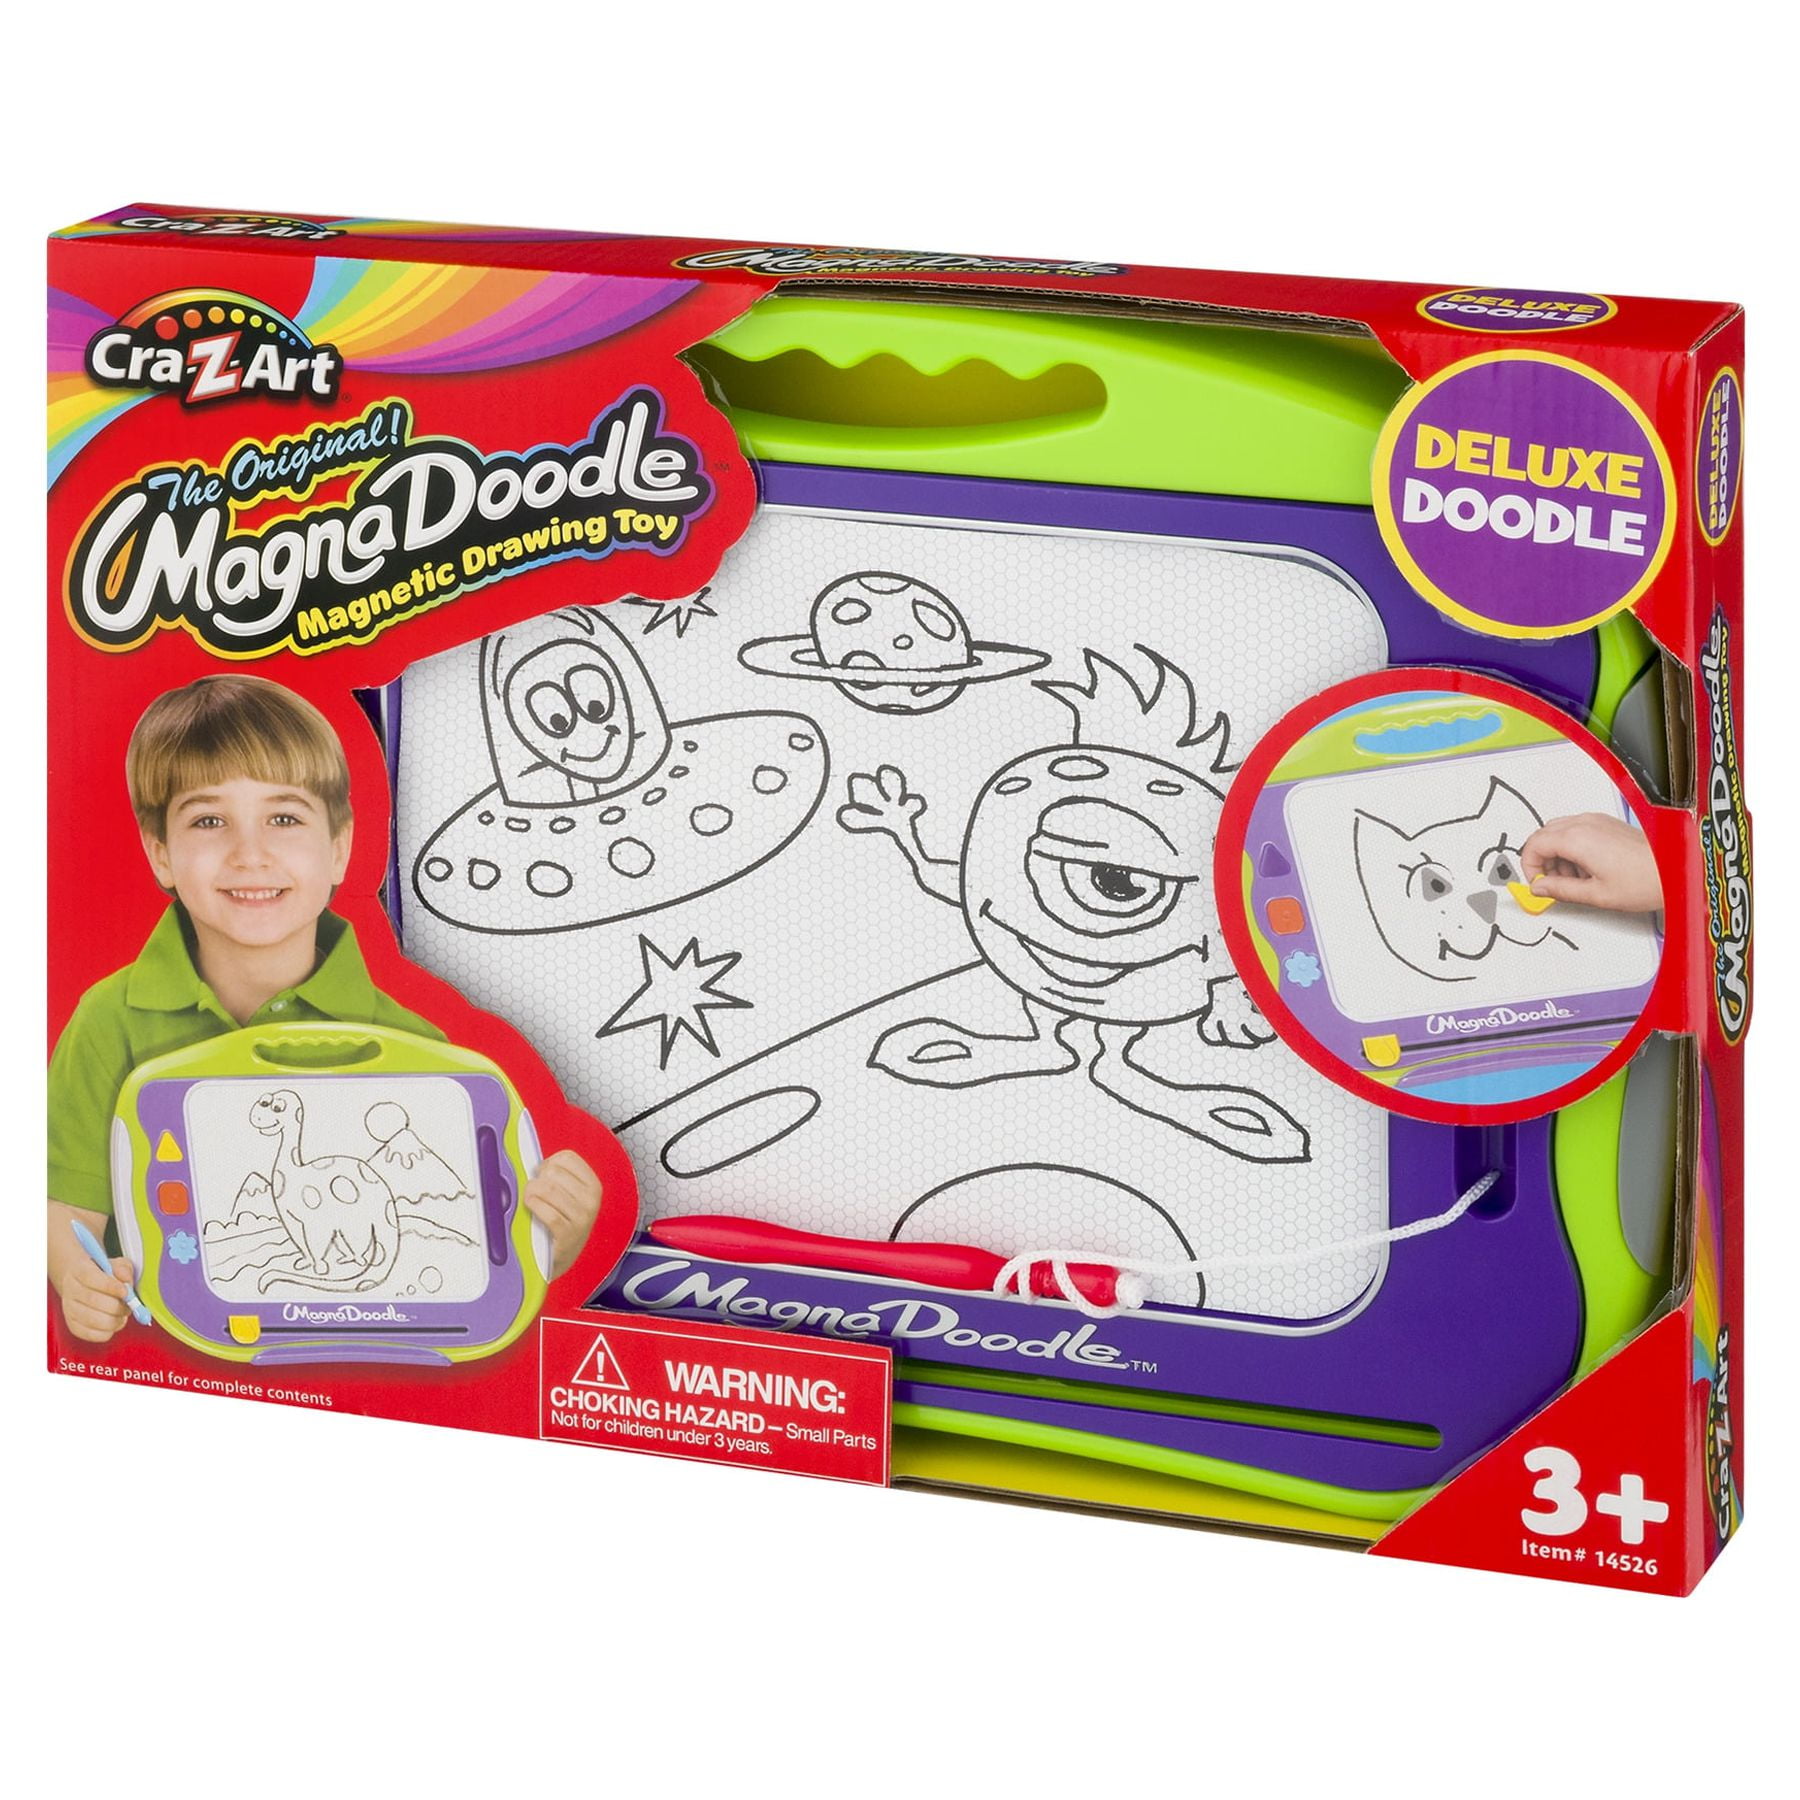 Walmart Toy Deals: Cra-Z-Art Classic Retro Magna Doodle only $7.50